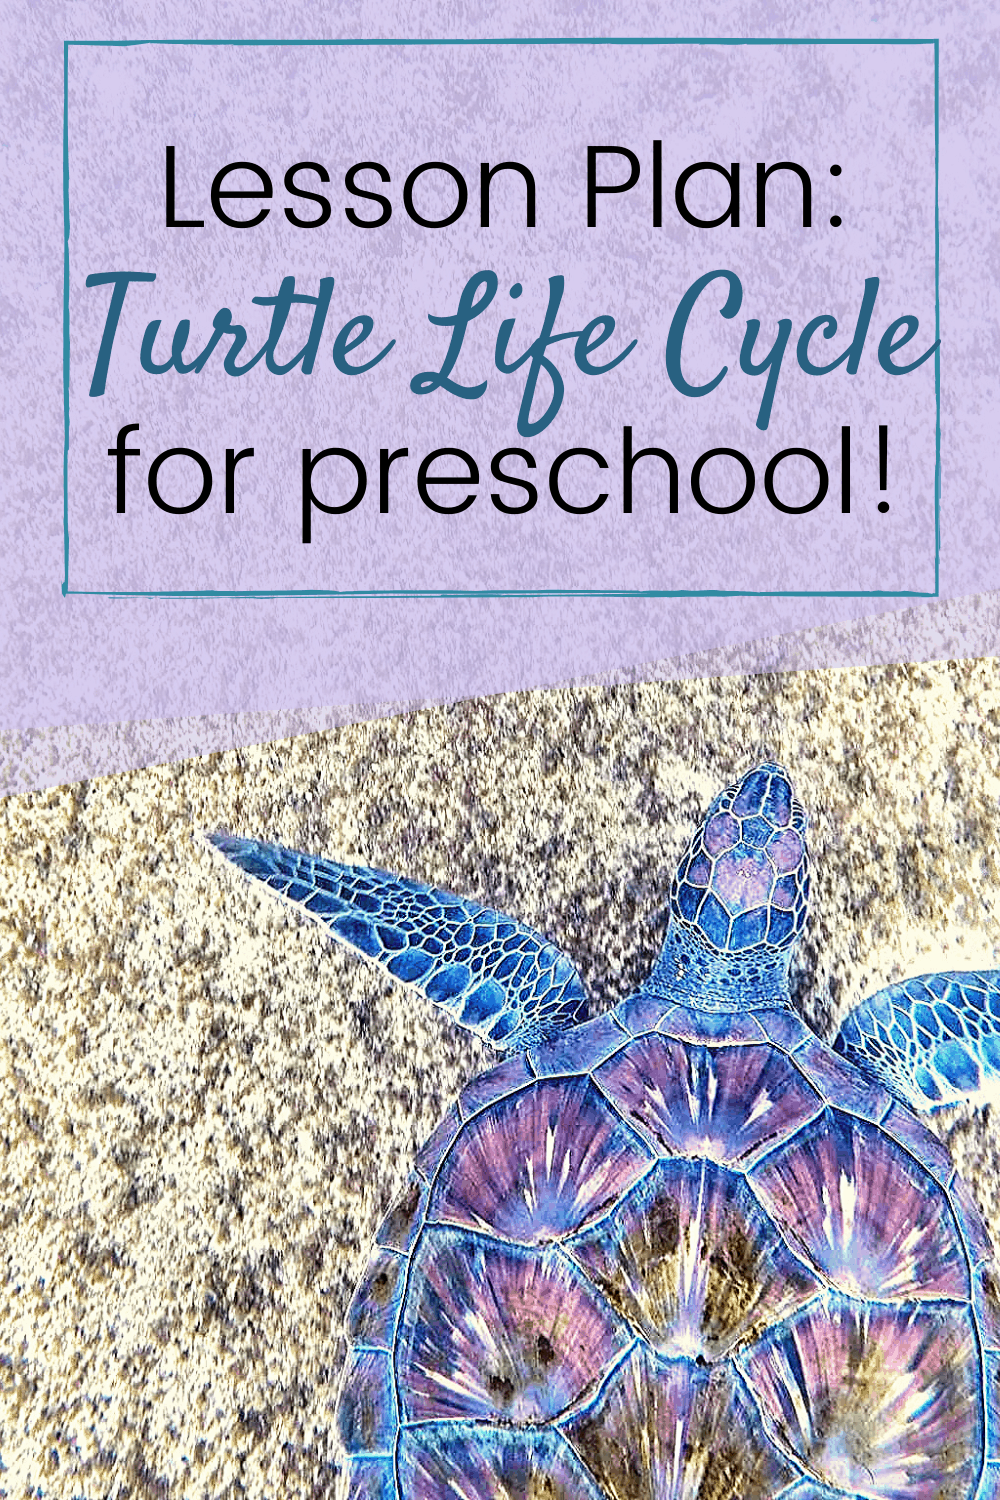 turtle-lc-2 Preschool Turtle Craft